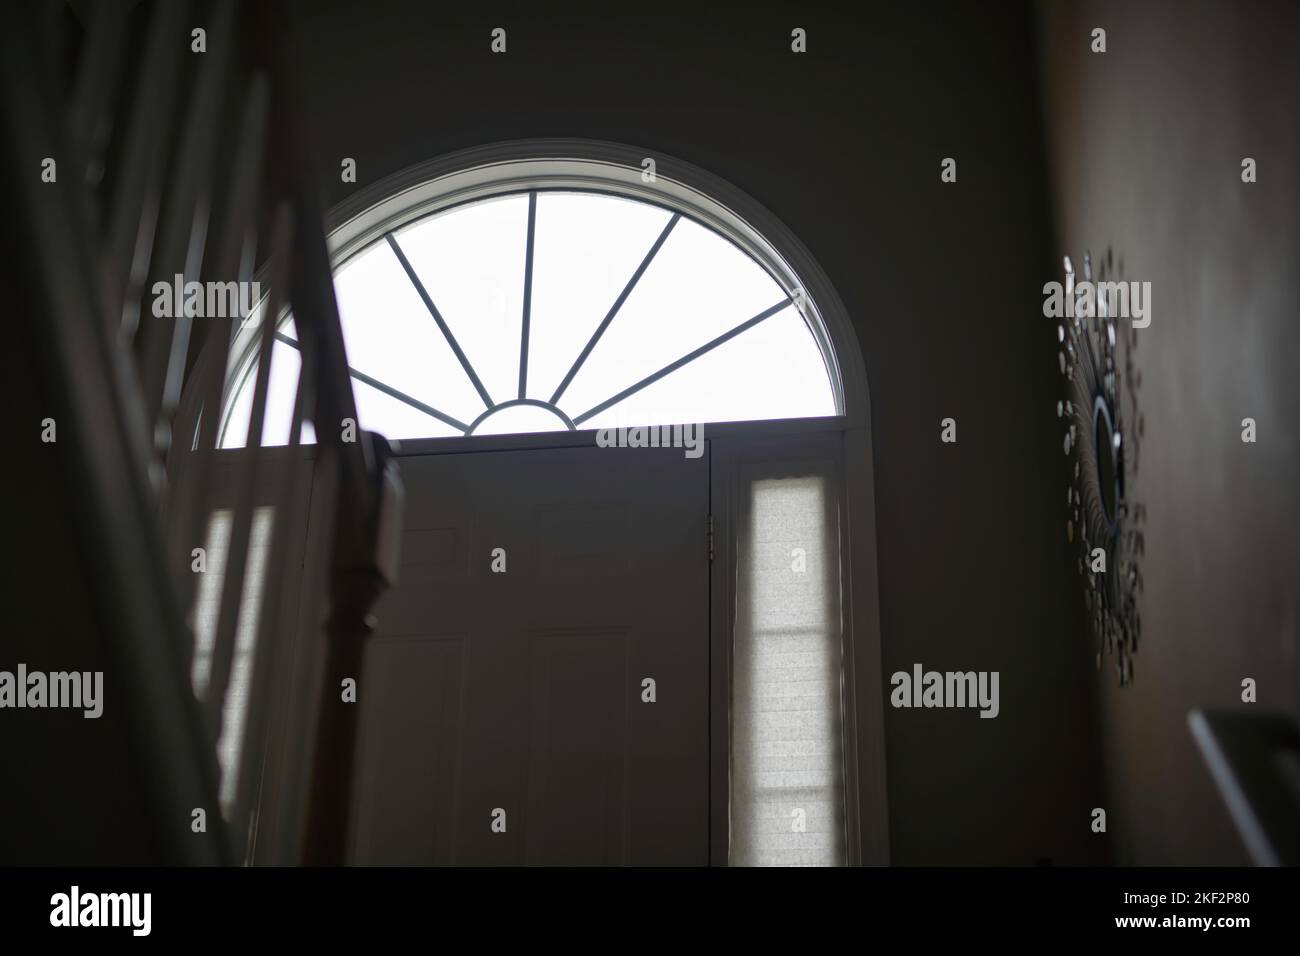 Window View through Fourier Inside House Stock Photo